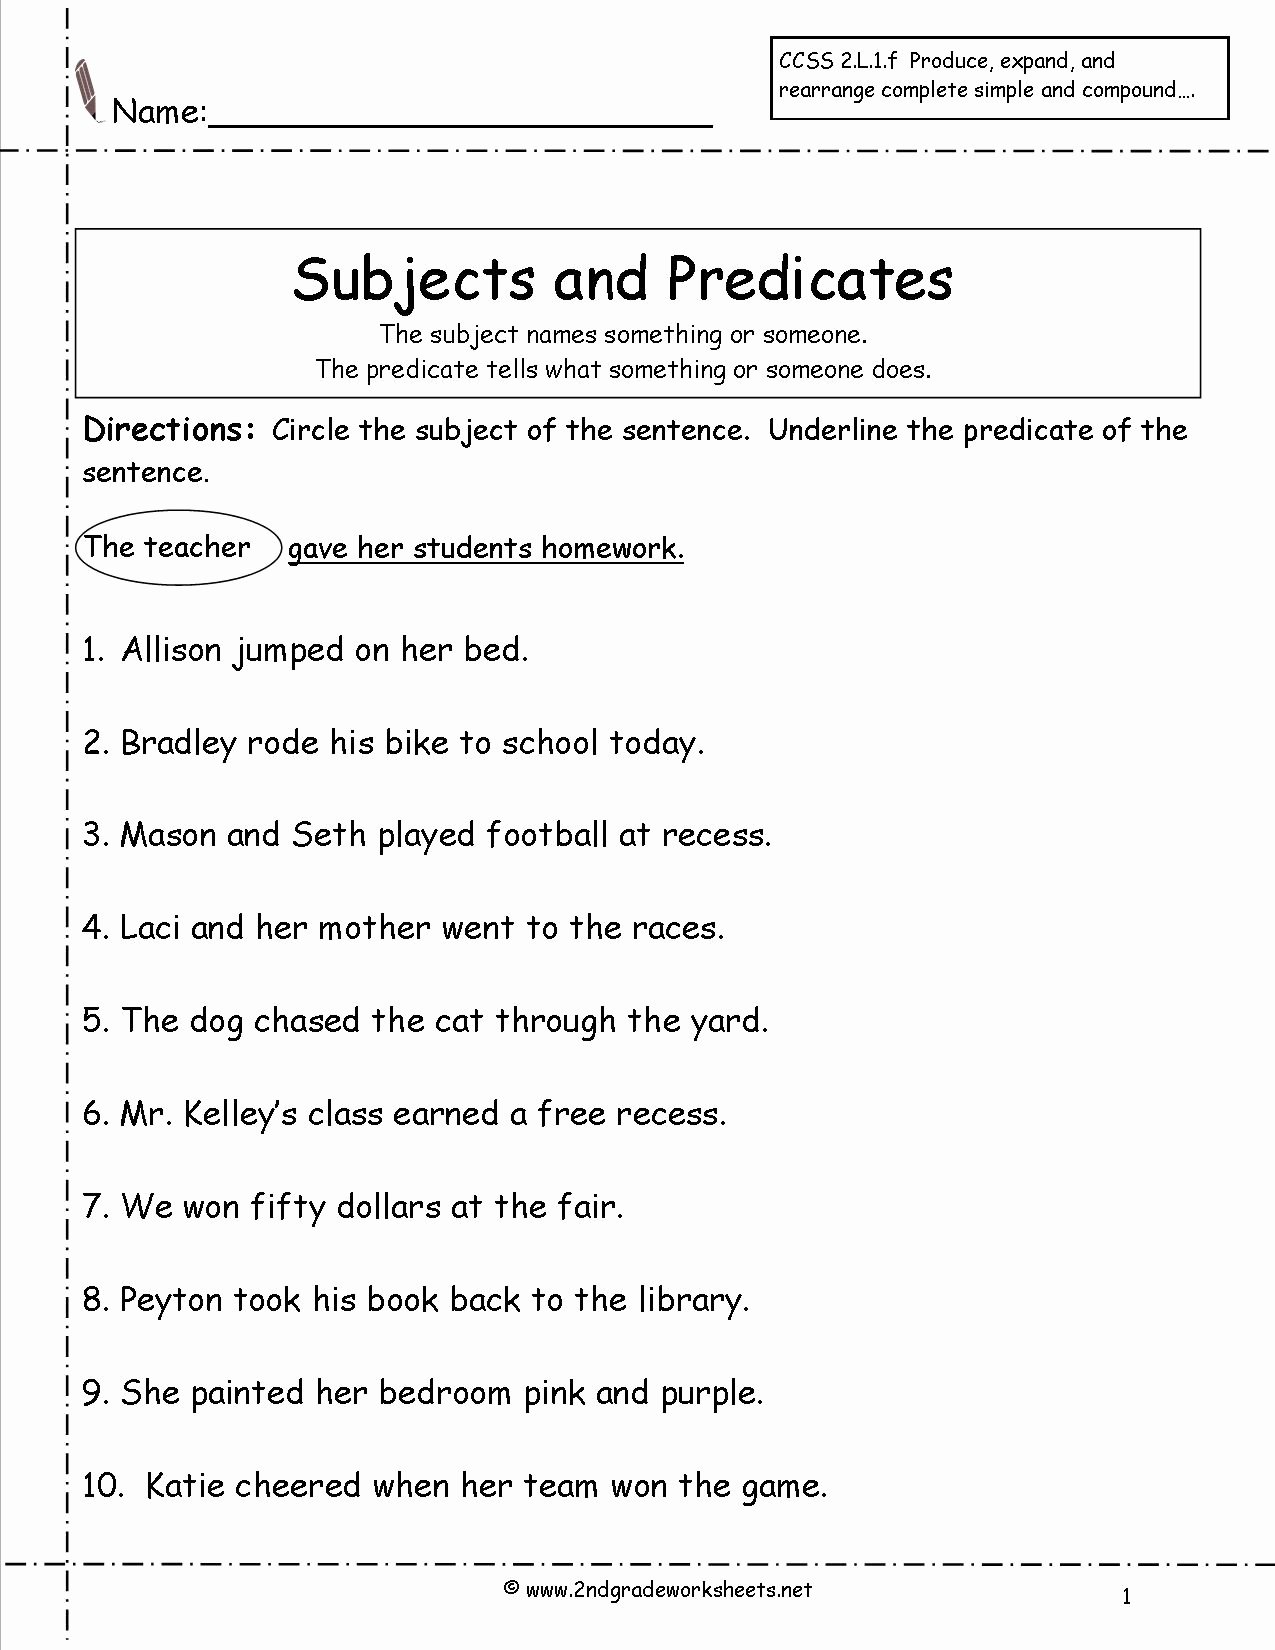 Subject Predicate Worksheet Pdf New Second Grade Sentences Worksheets Ccss 2 L 1 F Worksheets